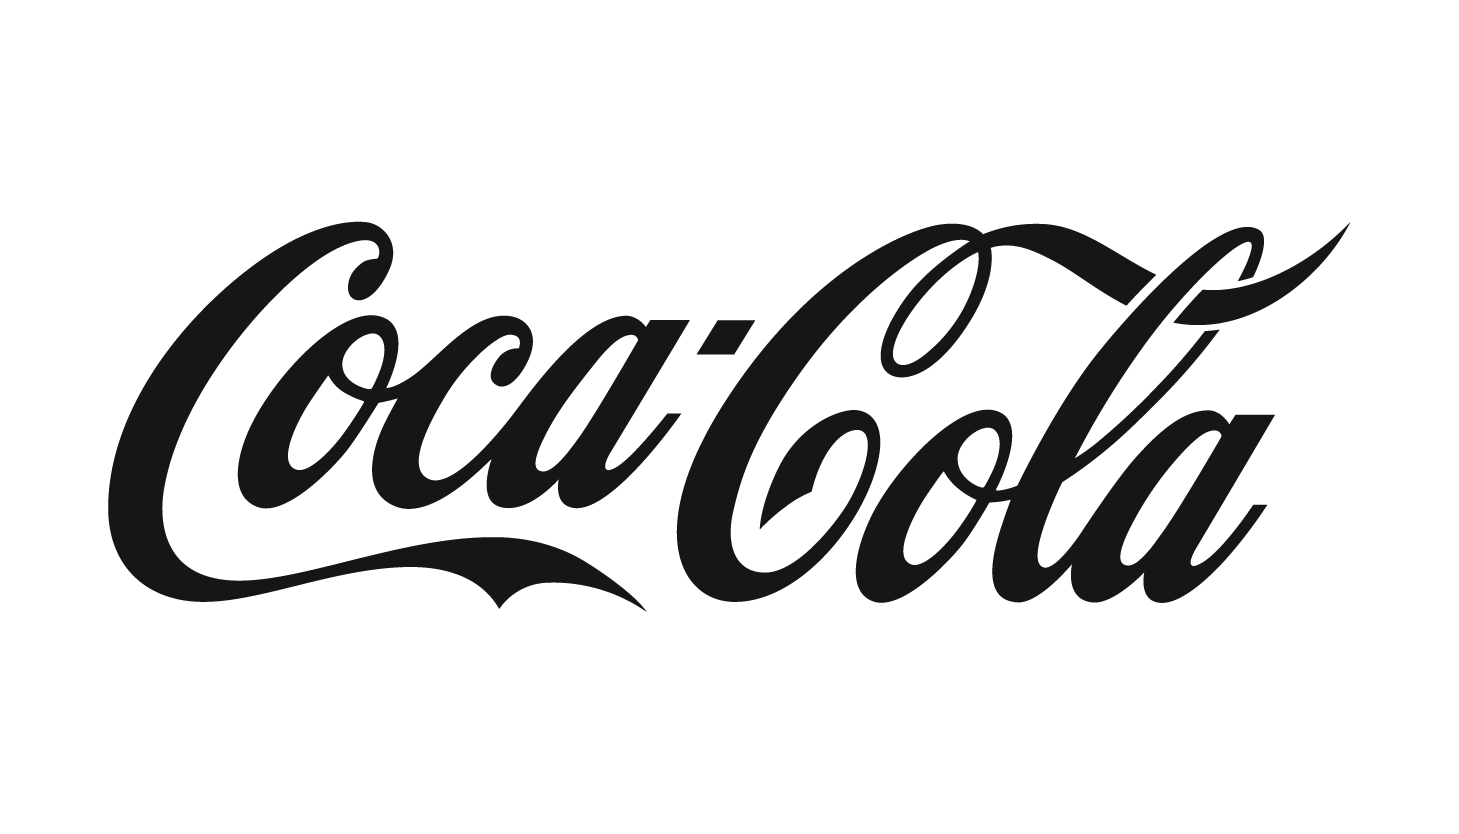 Website Logos_Coca Cola (1).png